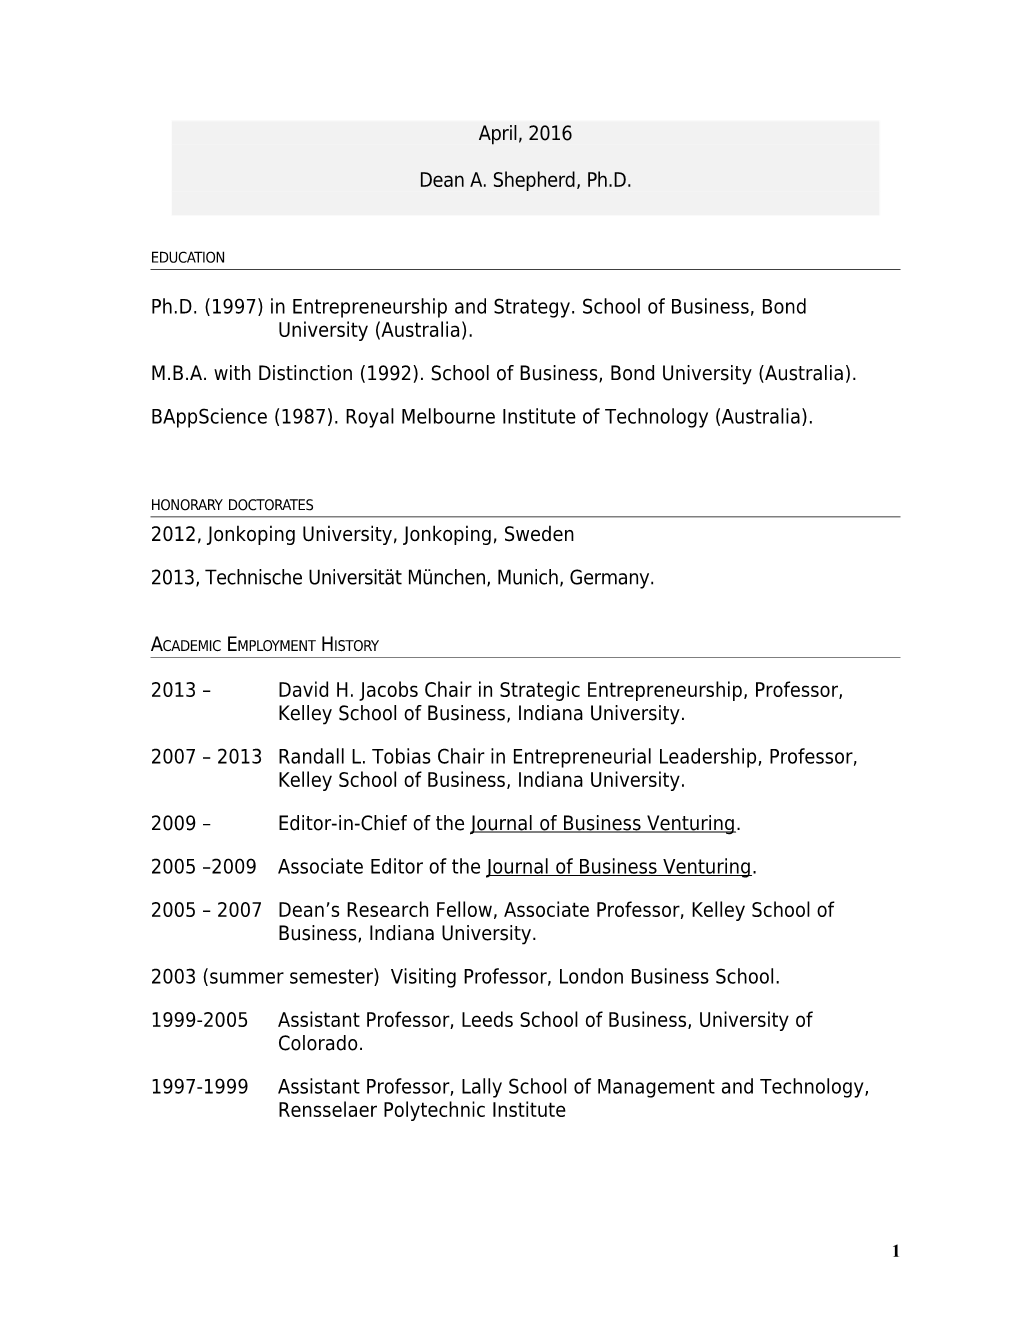 Ph.D. (1997) in Entrepreneurship and Strategy. School of Business, Bond University (Australia)